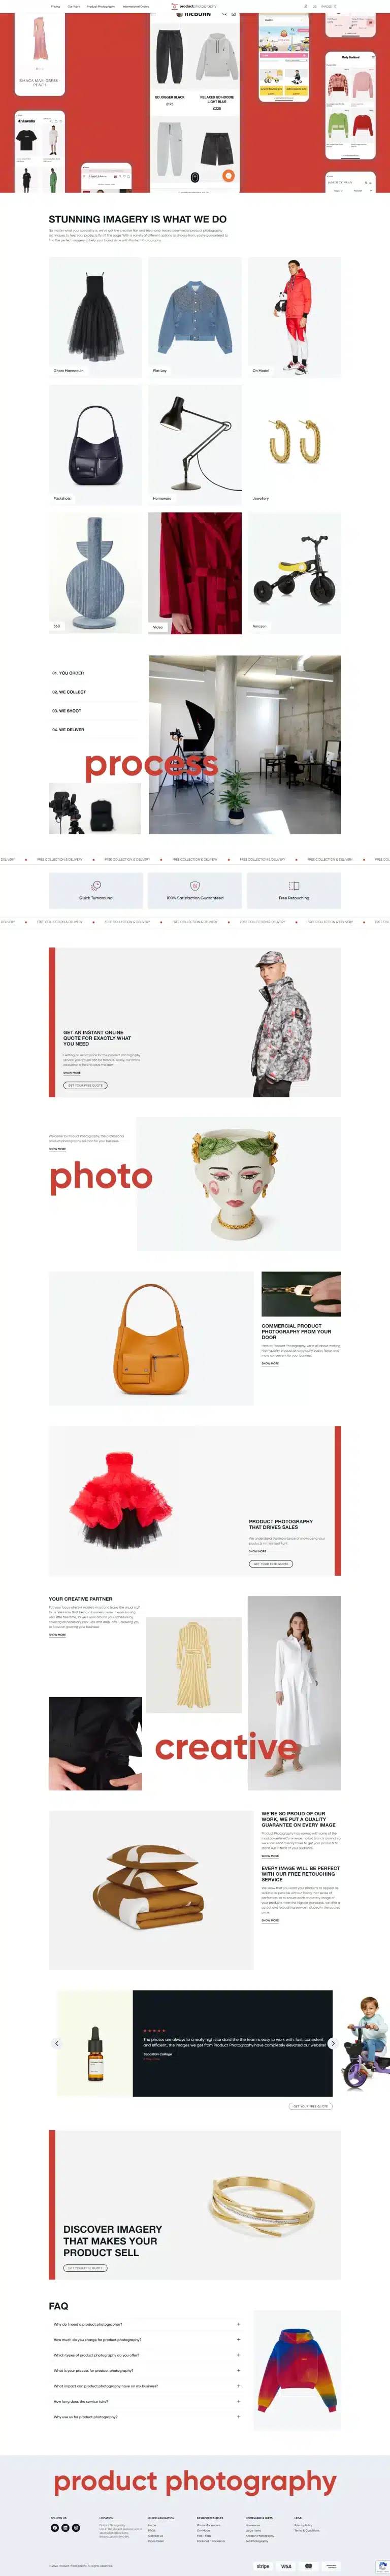 Product Photography Website Development Bespoke Web Design UK KNEXGEN WEBSITES